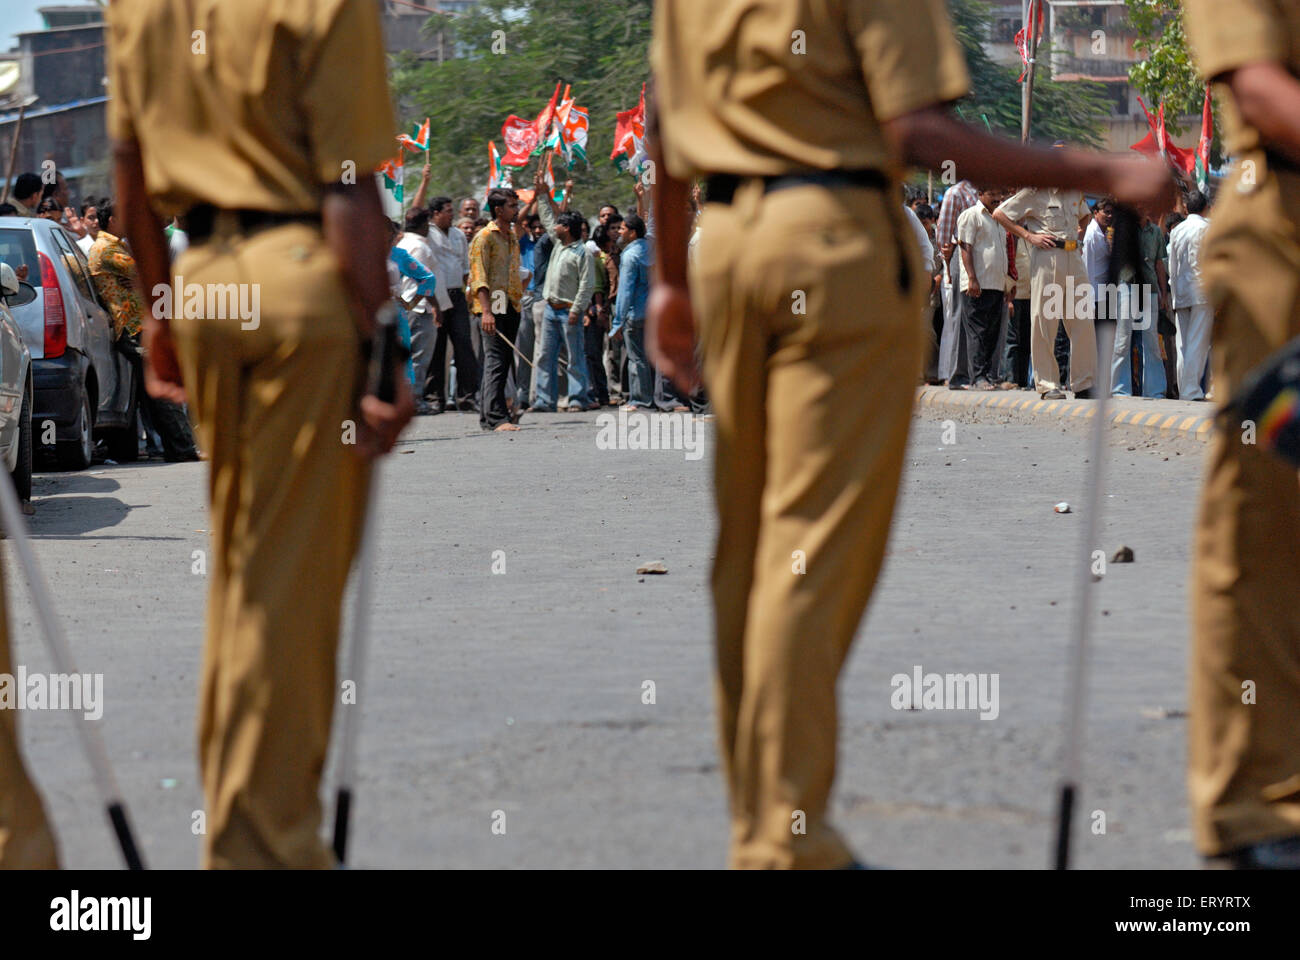 Guardare la polizia attivista del Maharashtra navnirman sena mns protestando ; Bandra ; Bombay Mumbai Foto Stock